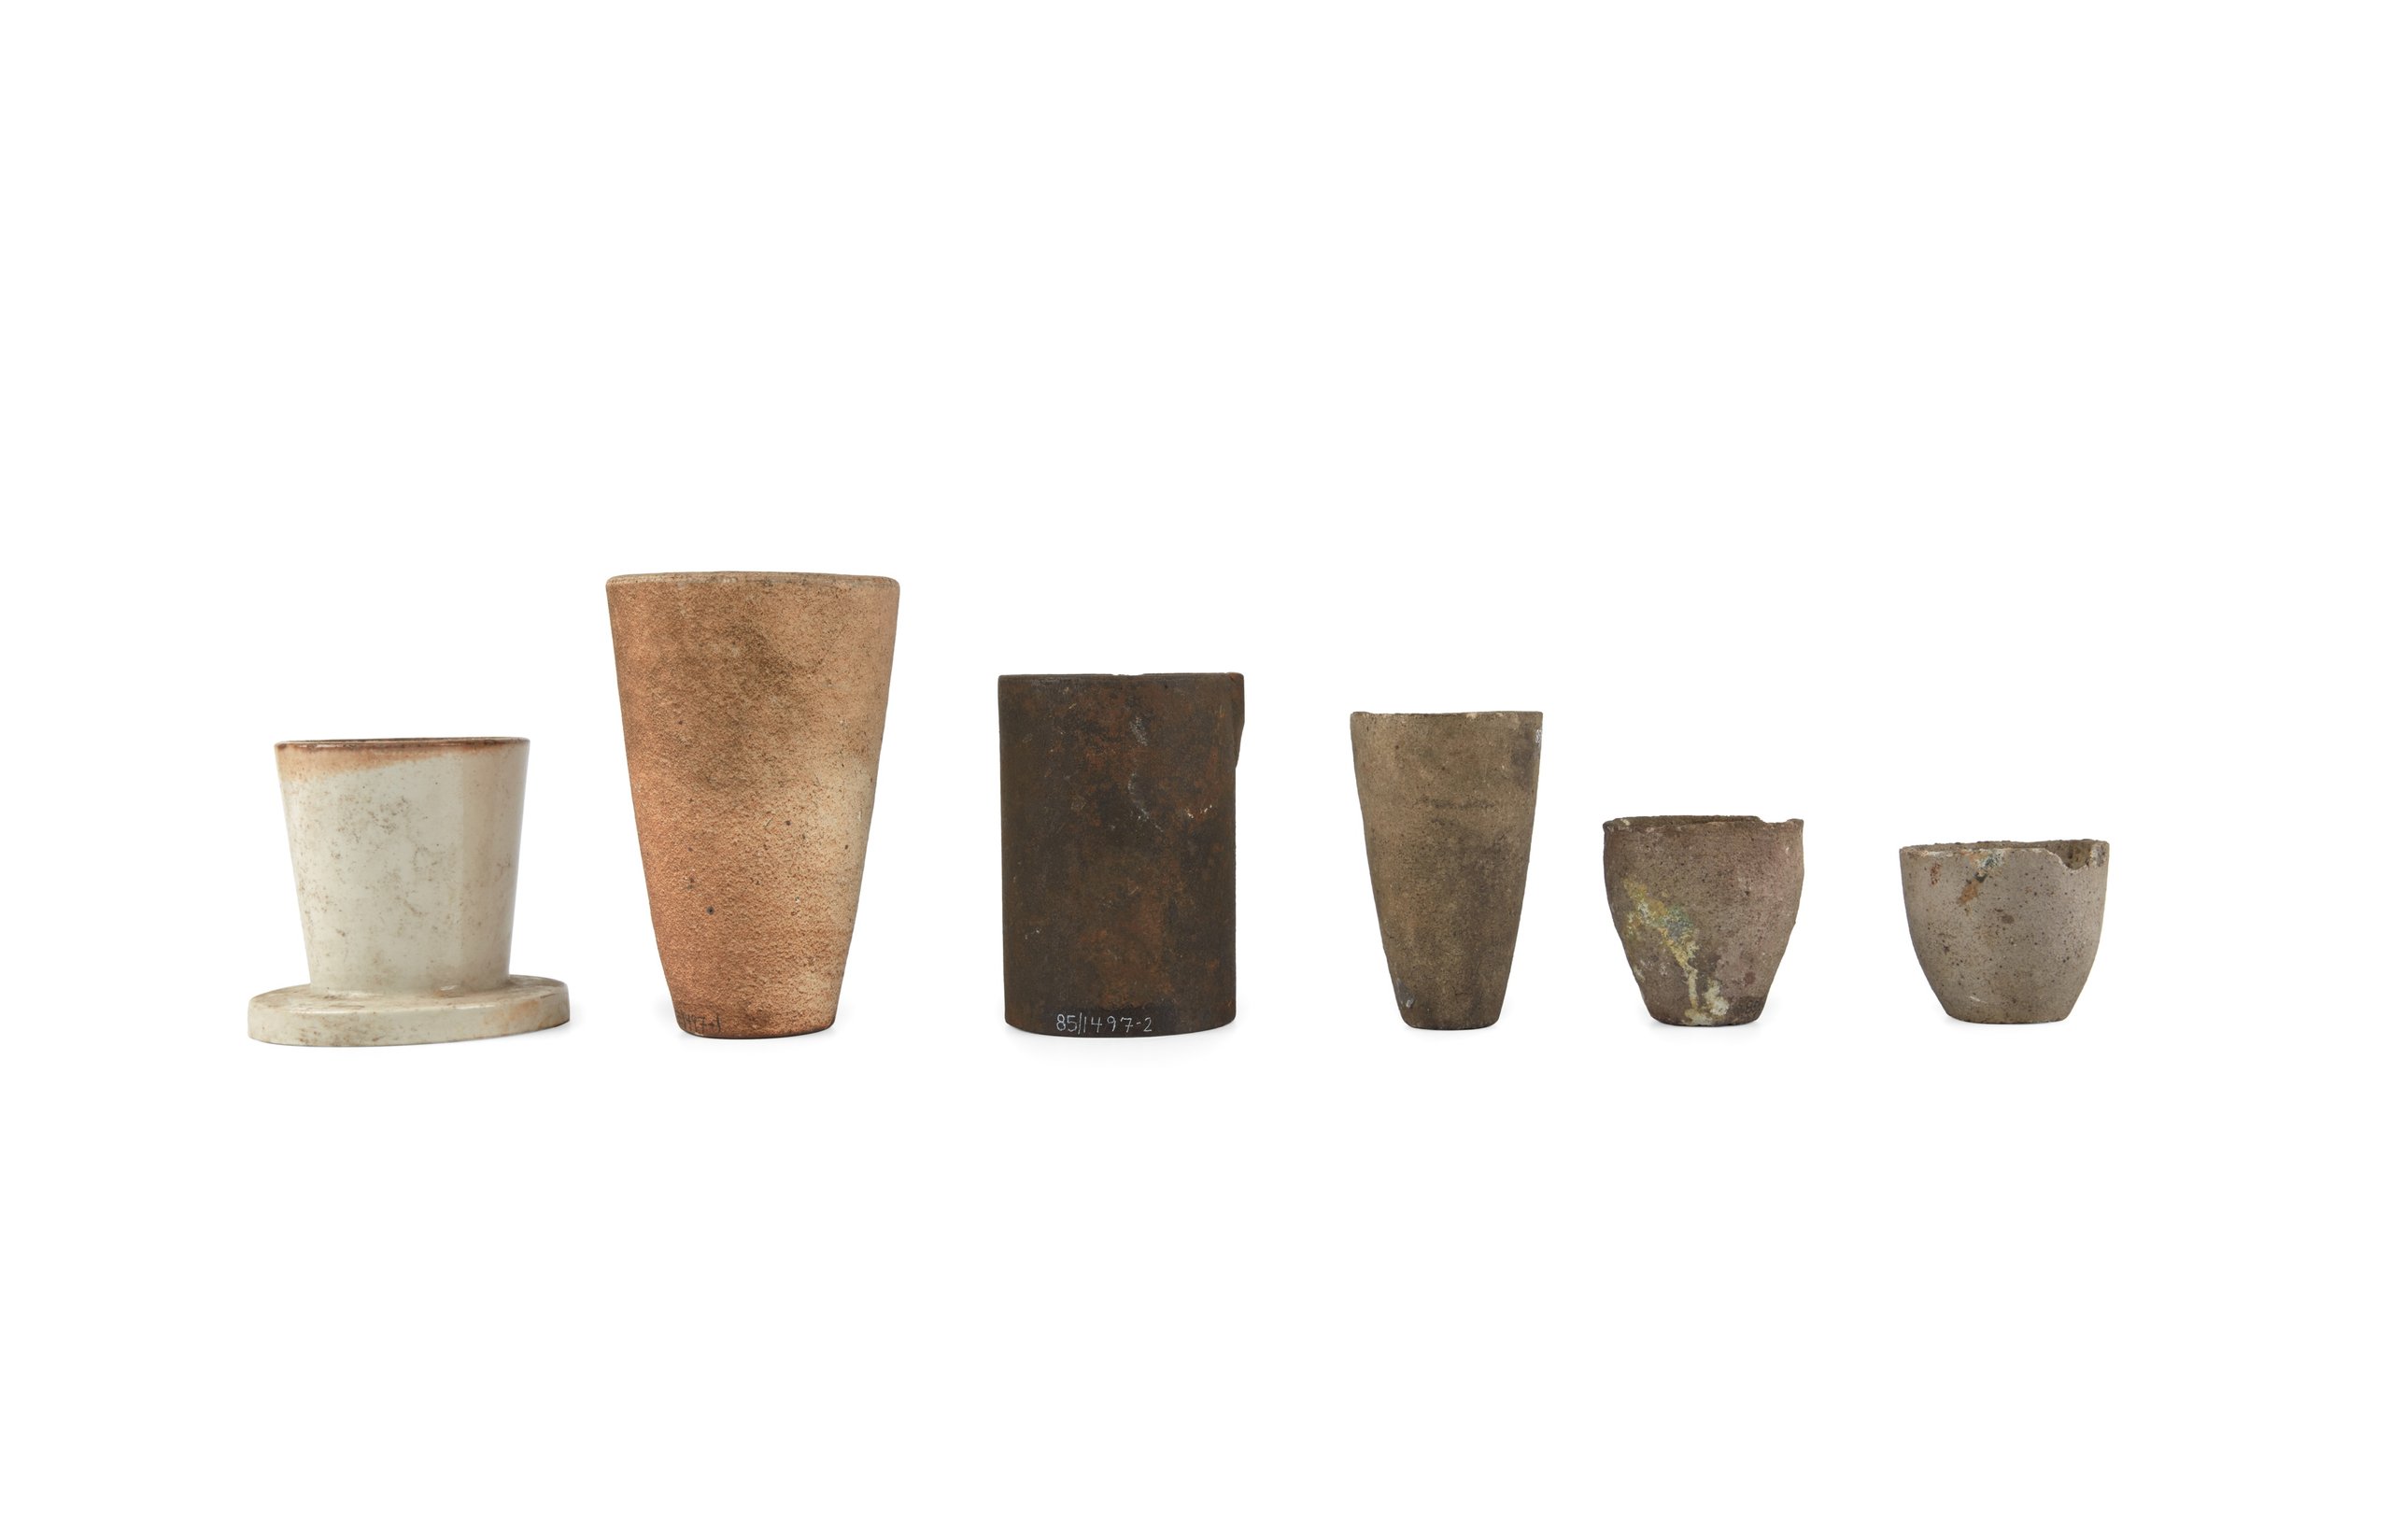 Six ceramic crucibles